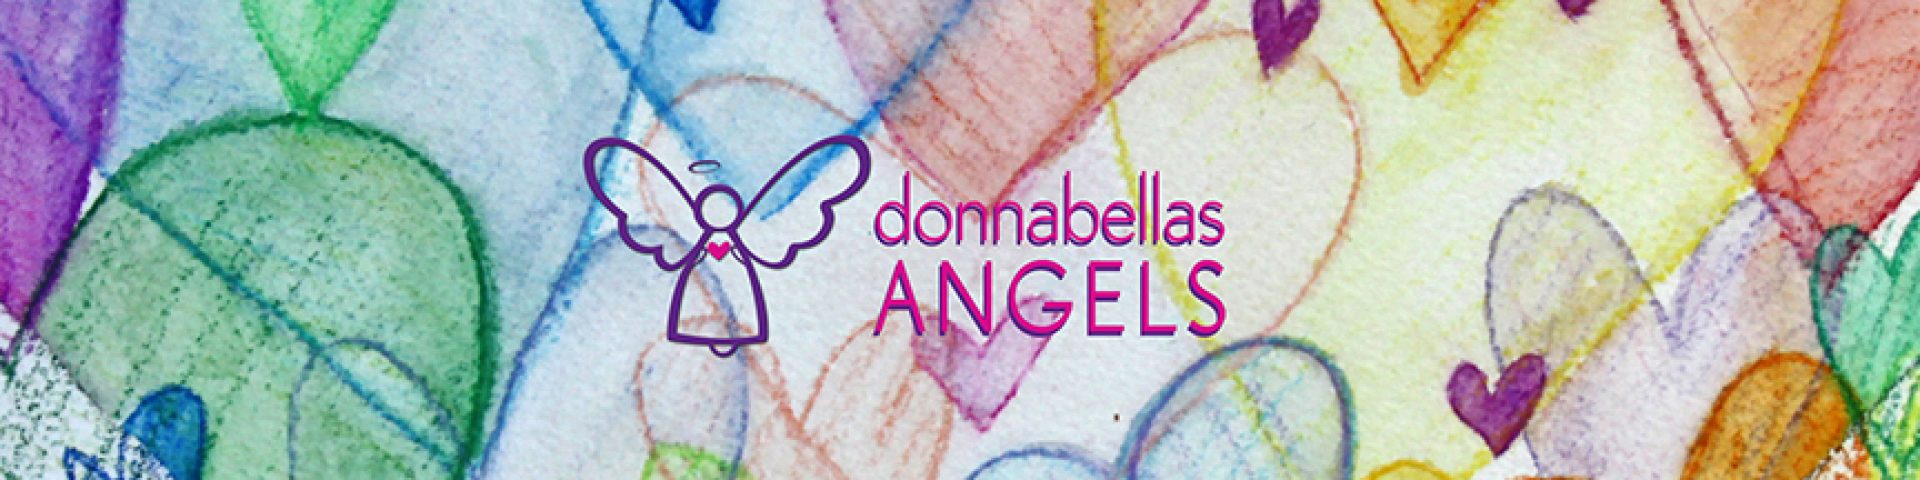 DonnaBellas Angels